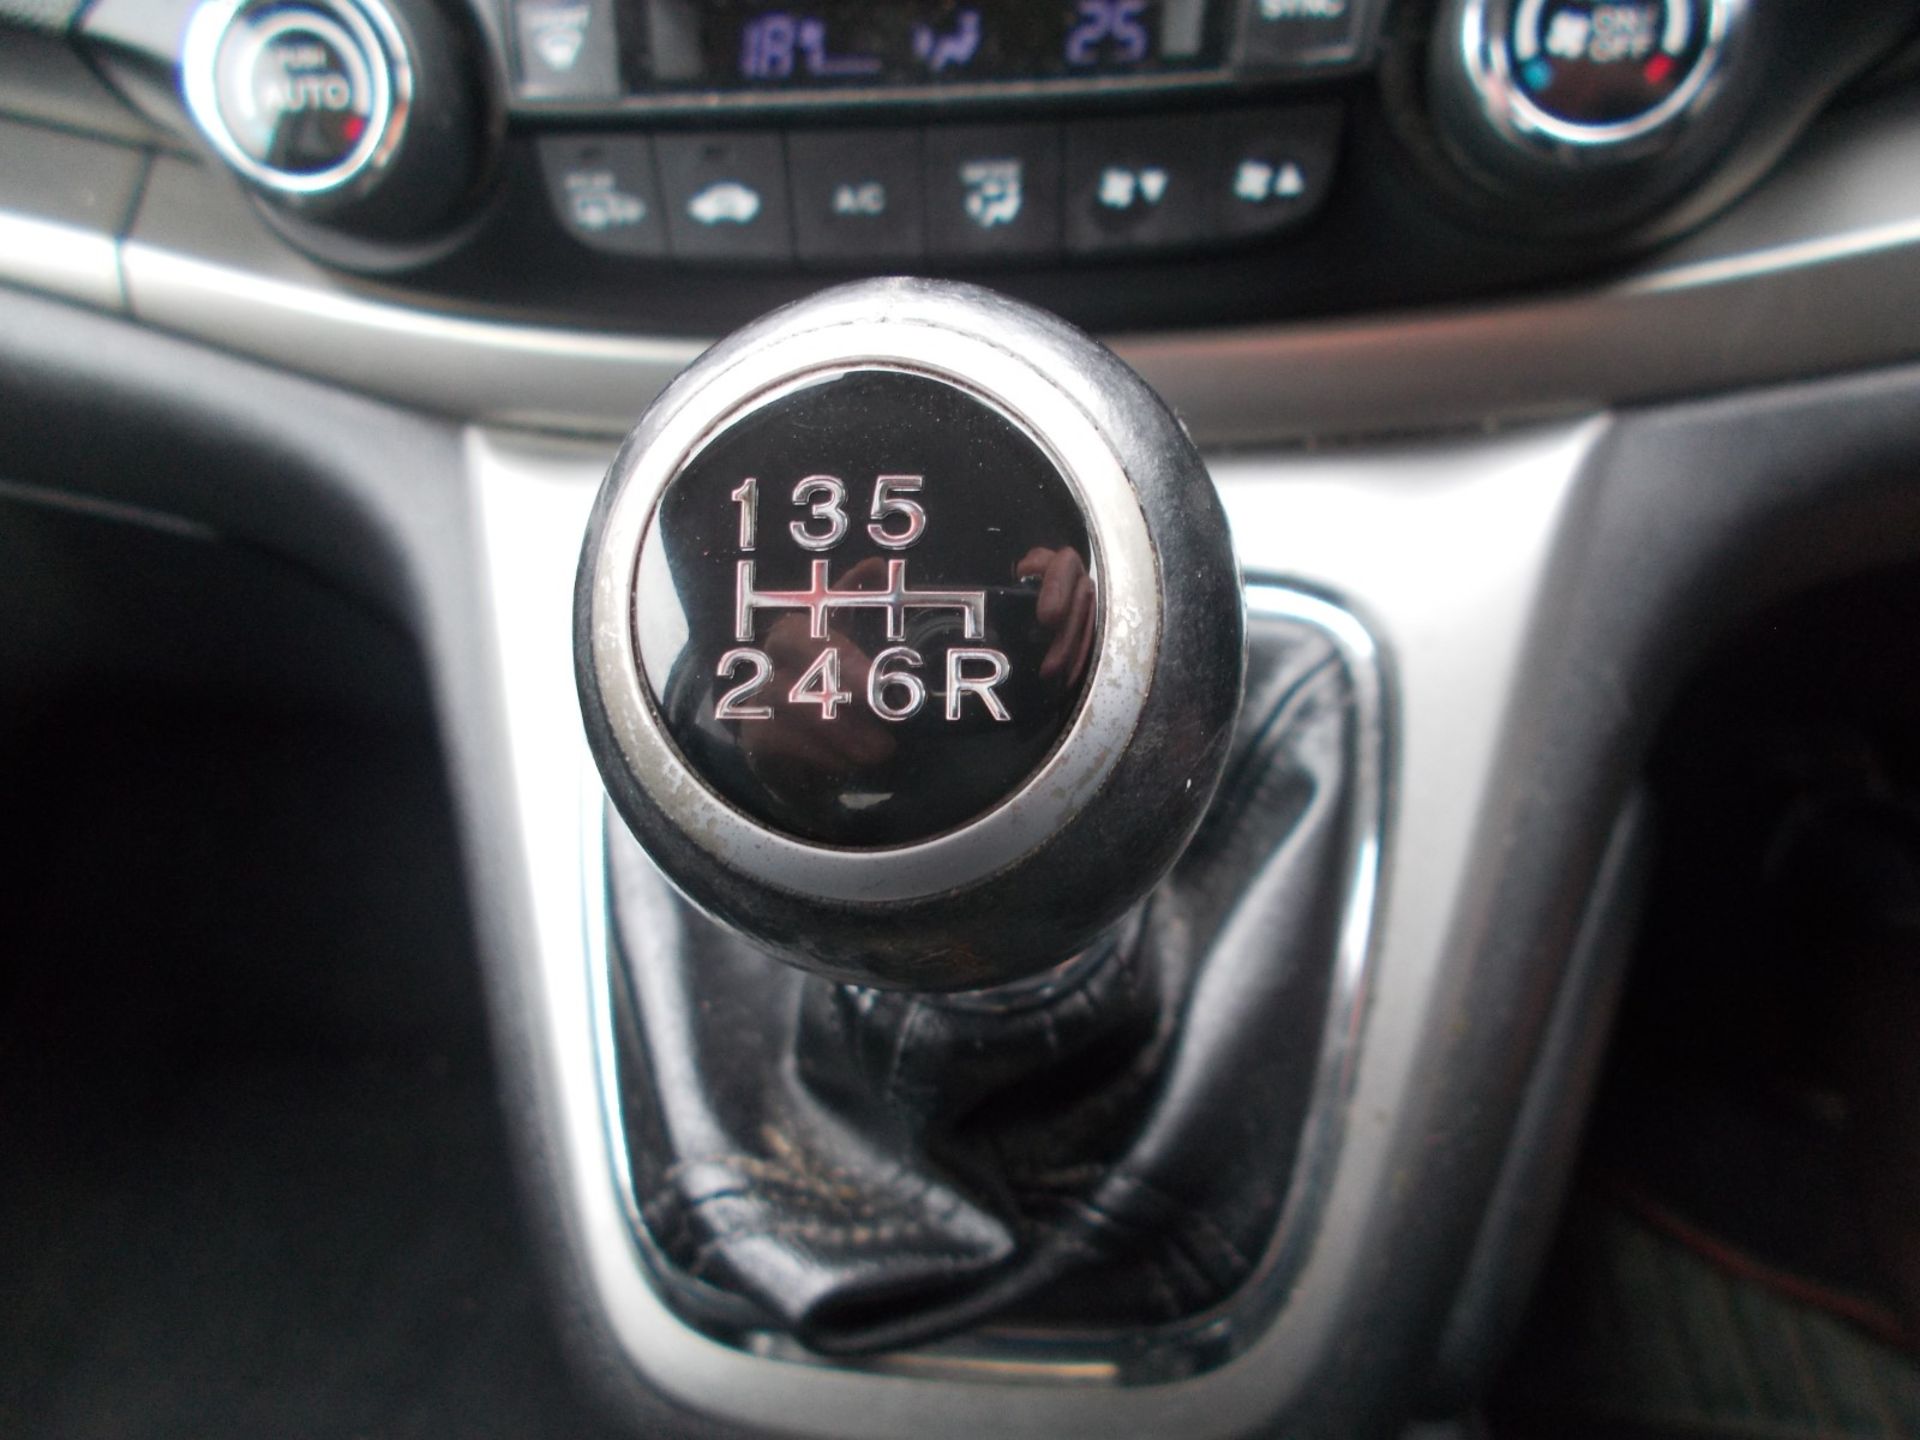 2014 (14) HONDA CR-V SR I-DTEC 4X2 BLACK ESTATE, 1.6 DIESEL, 152K MILES *PLUS VAT* - Image 12 of 33